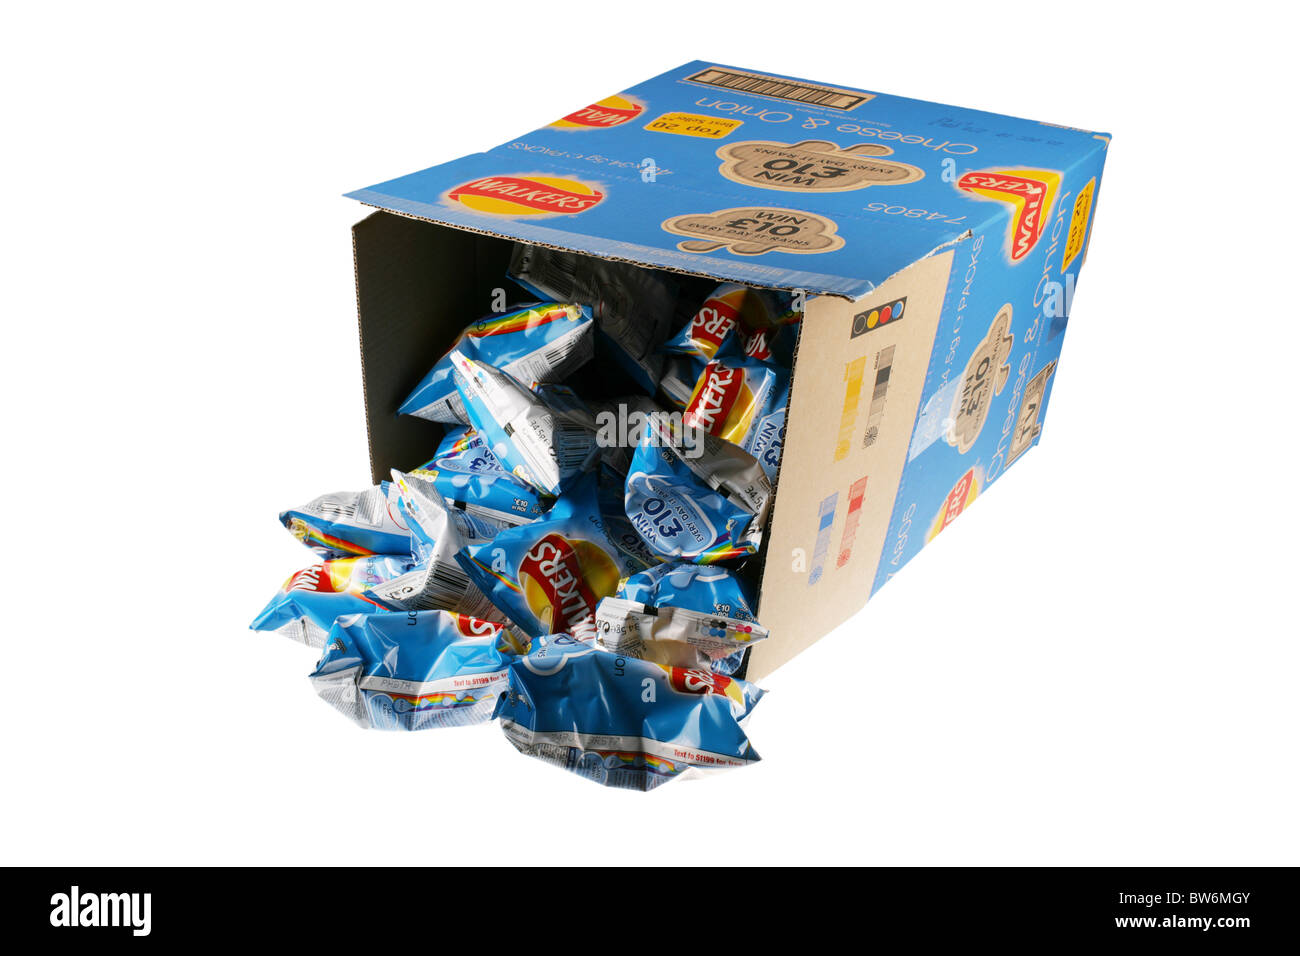 48 Pack Box of Crisps Stock Photo